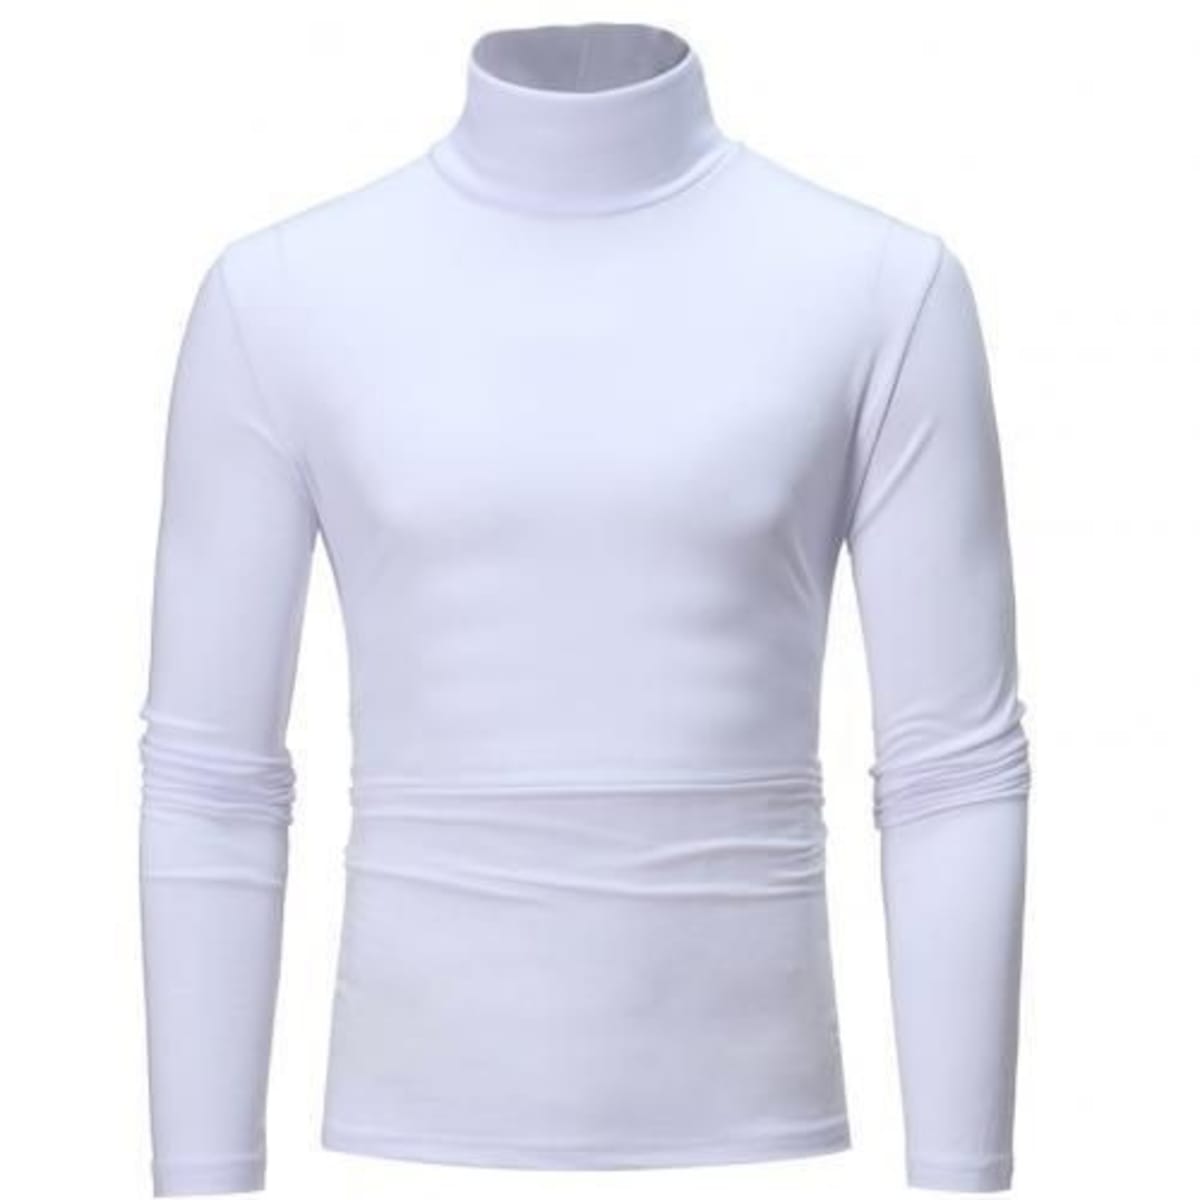 T-shirt long sleeves high neck white